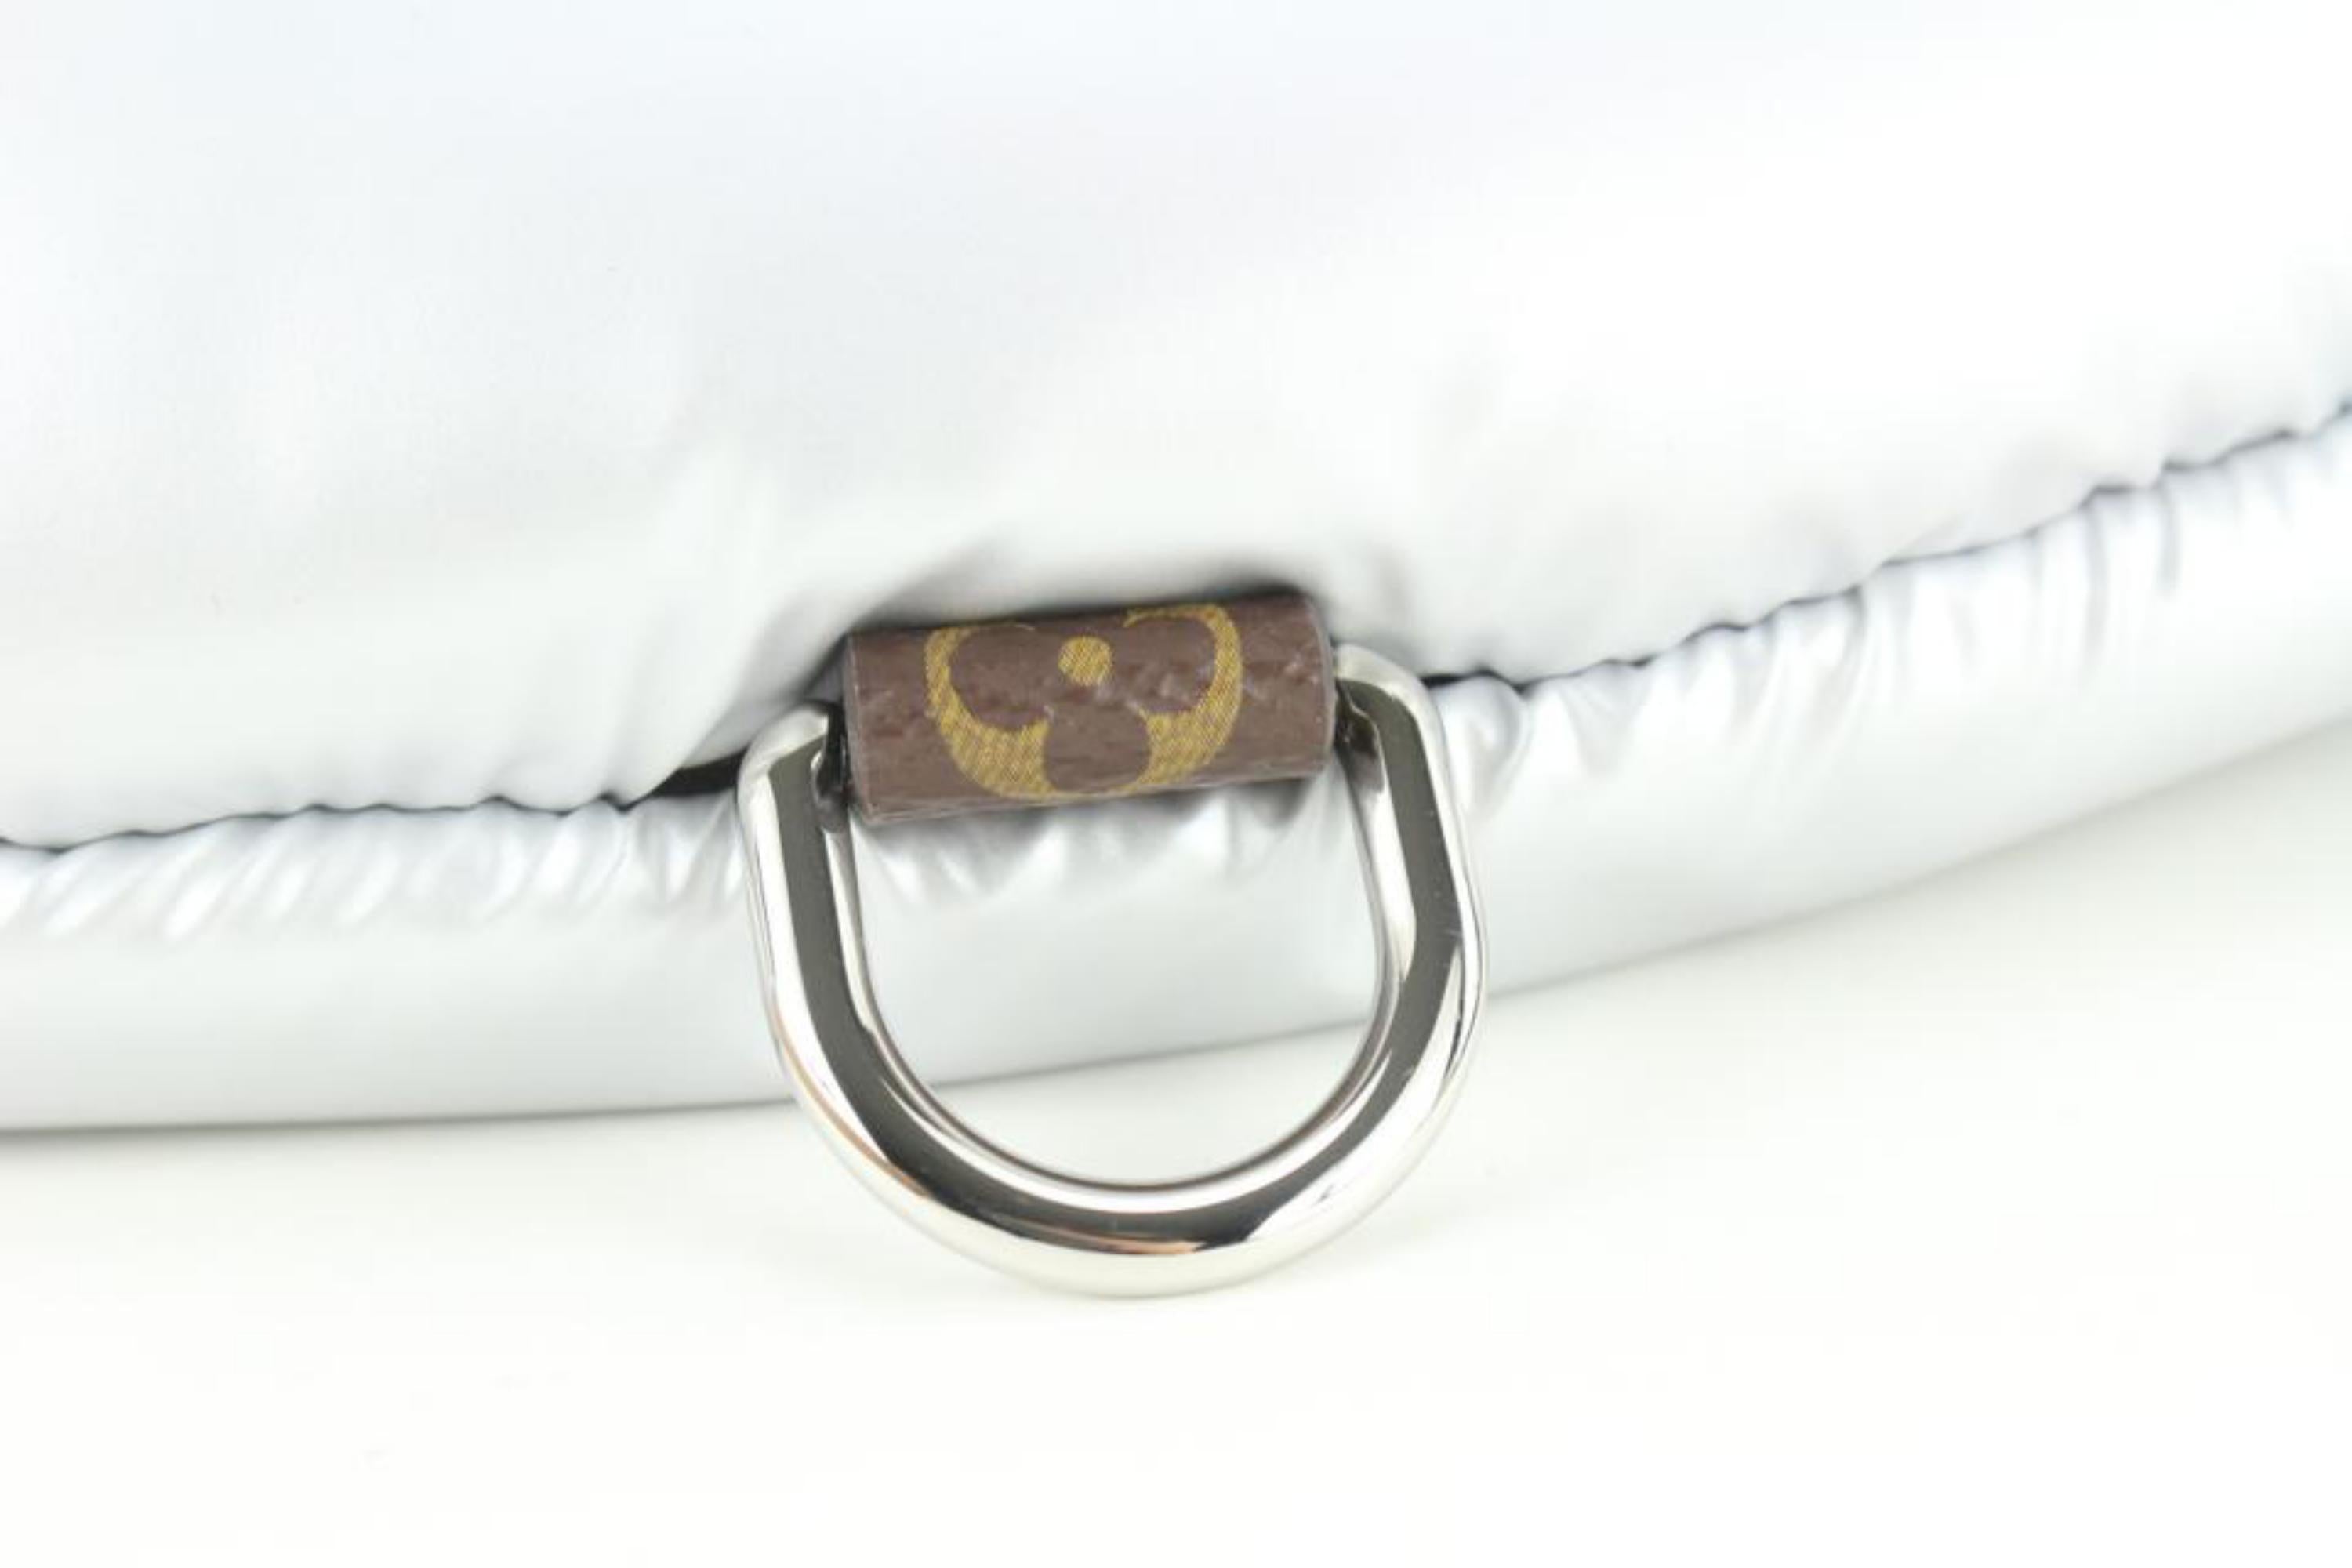 Vuitton NIB Silver Pillow Bumbag LOGO